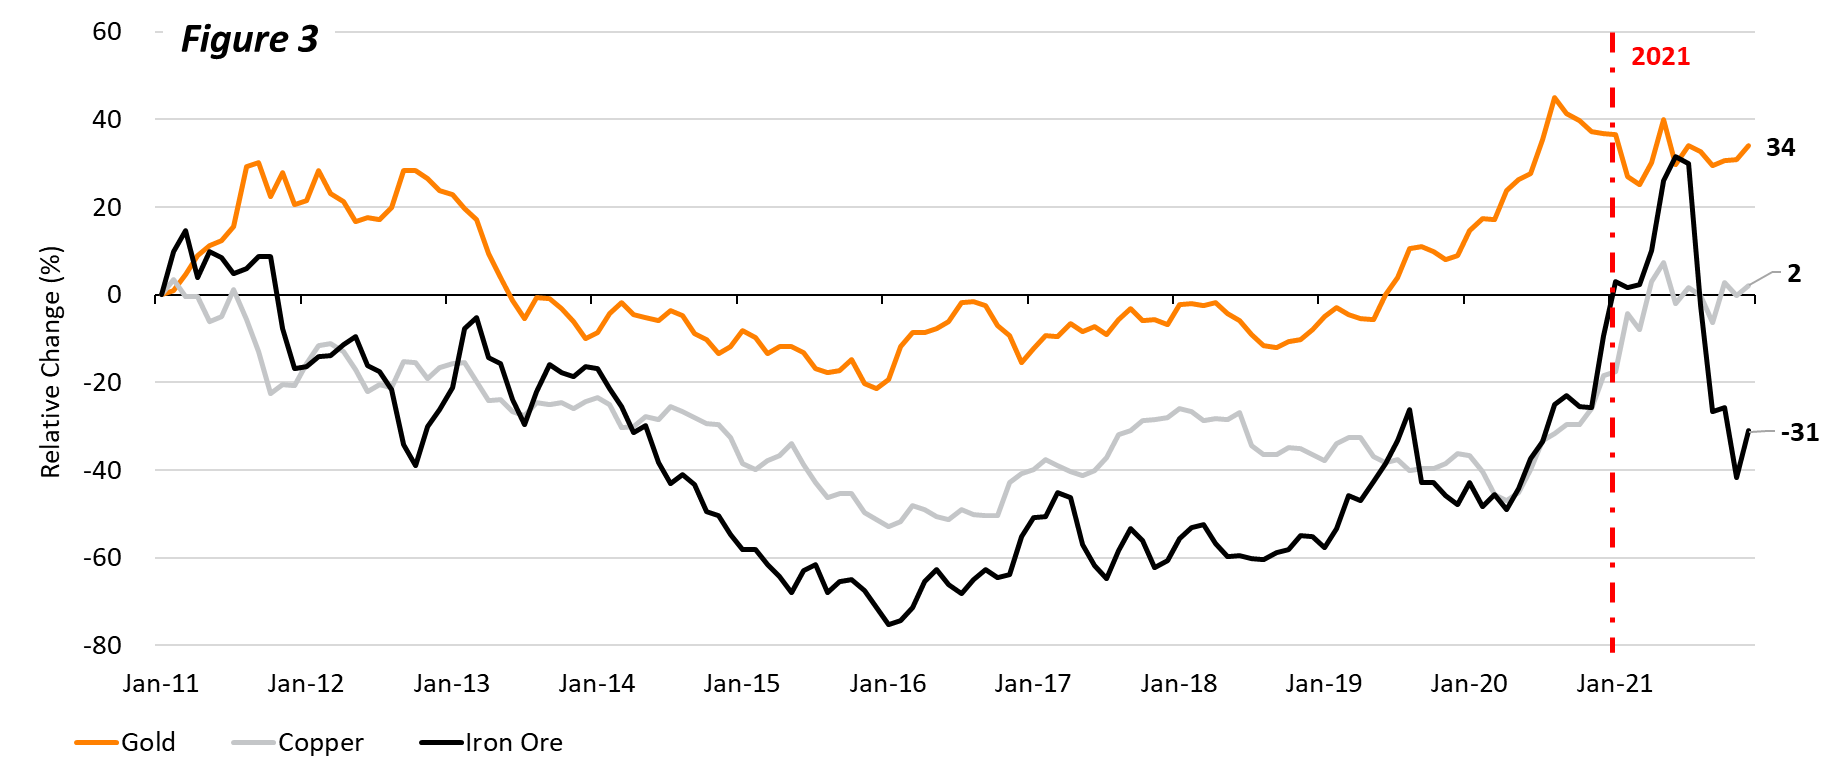 Figure 3_2011-2021 price change